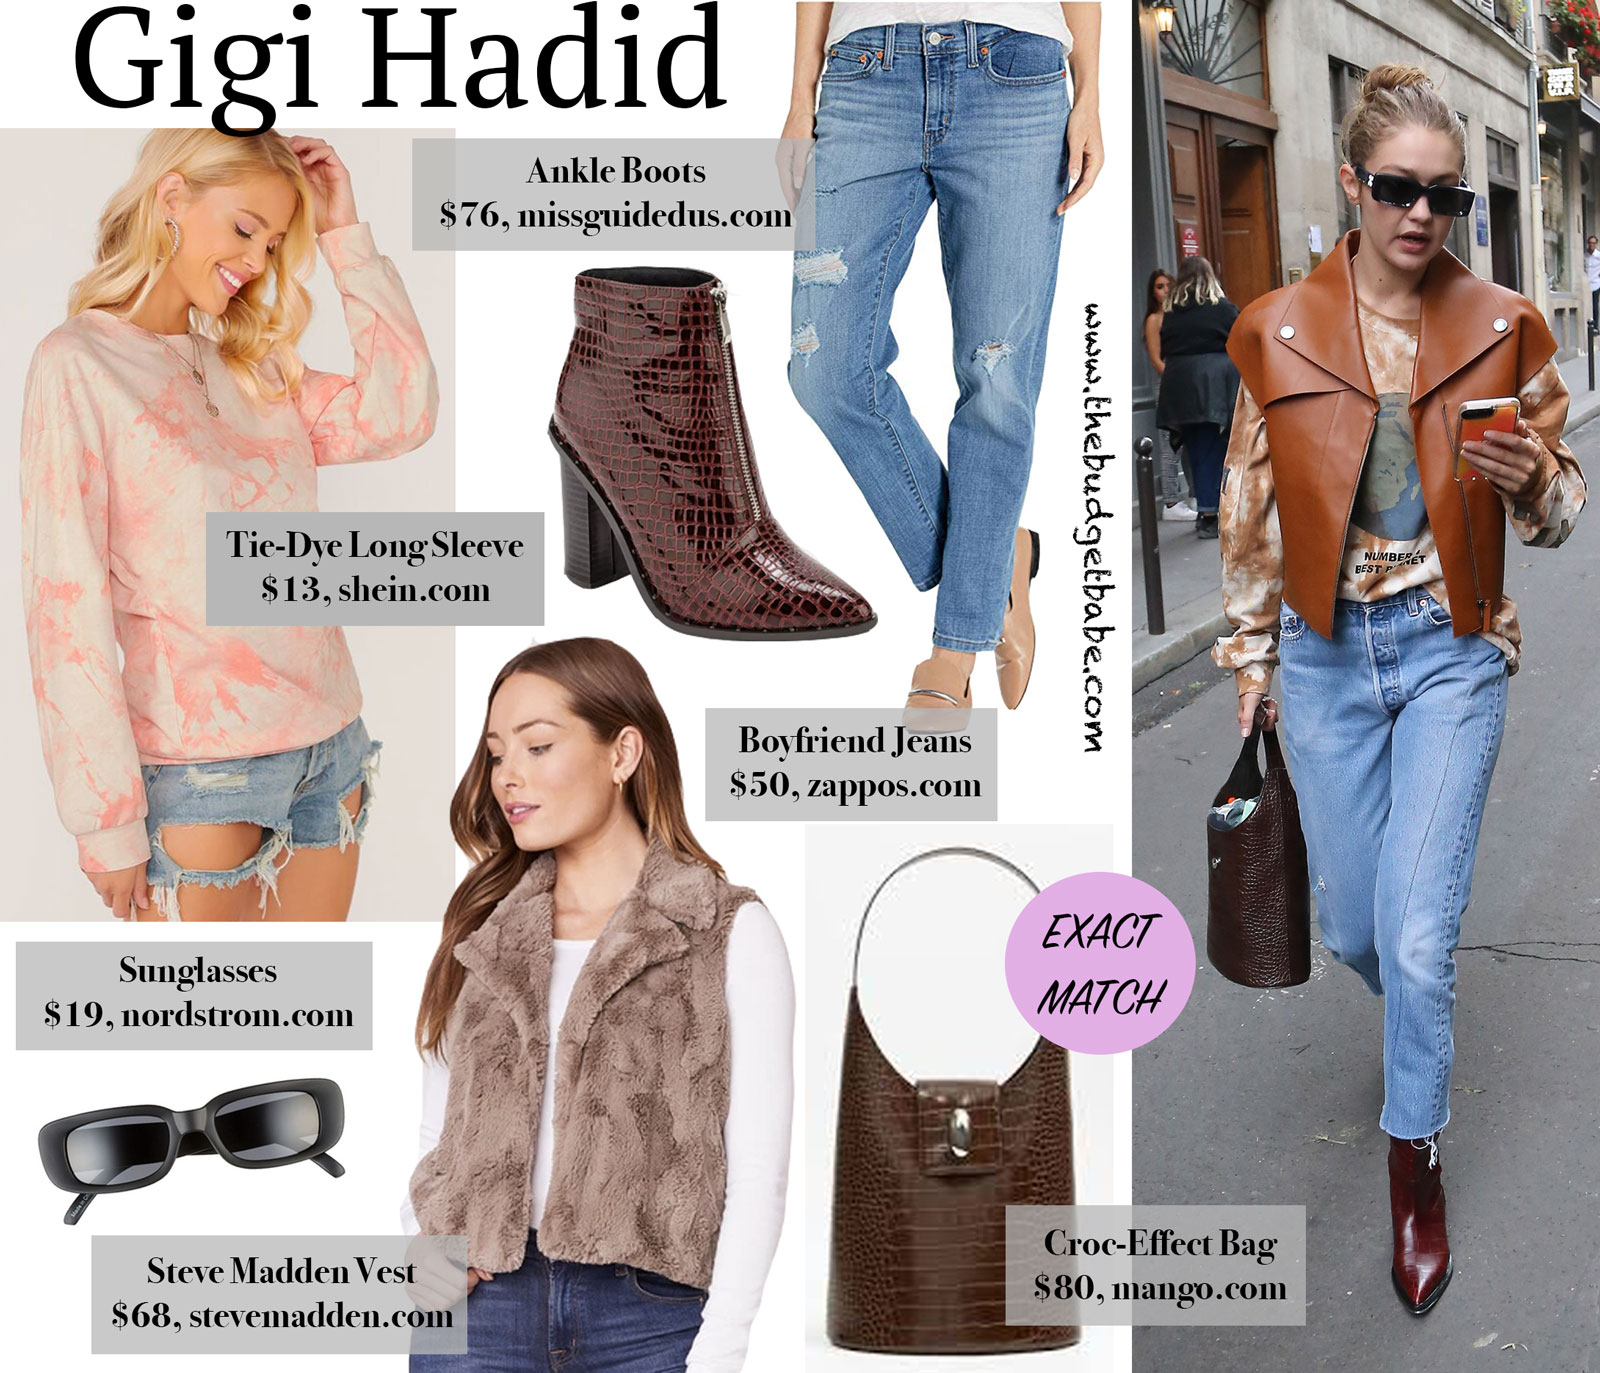 Gigi Hadid Vest and Mango Bag Look for Less